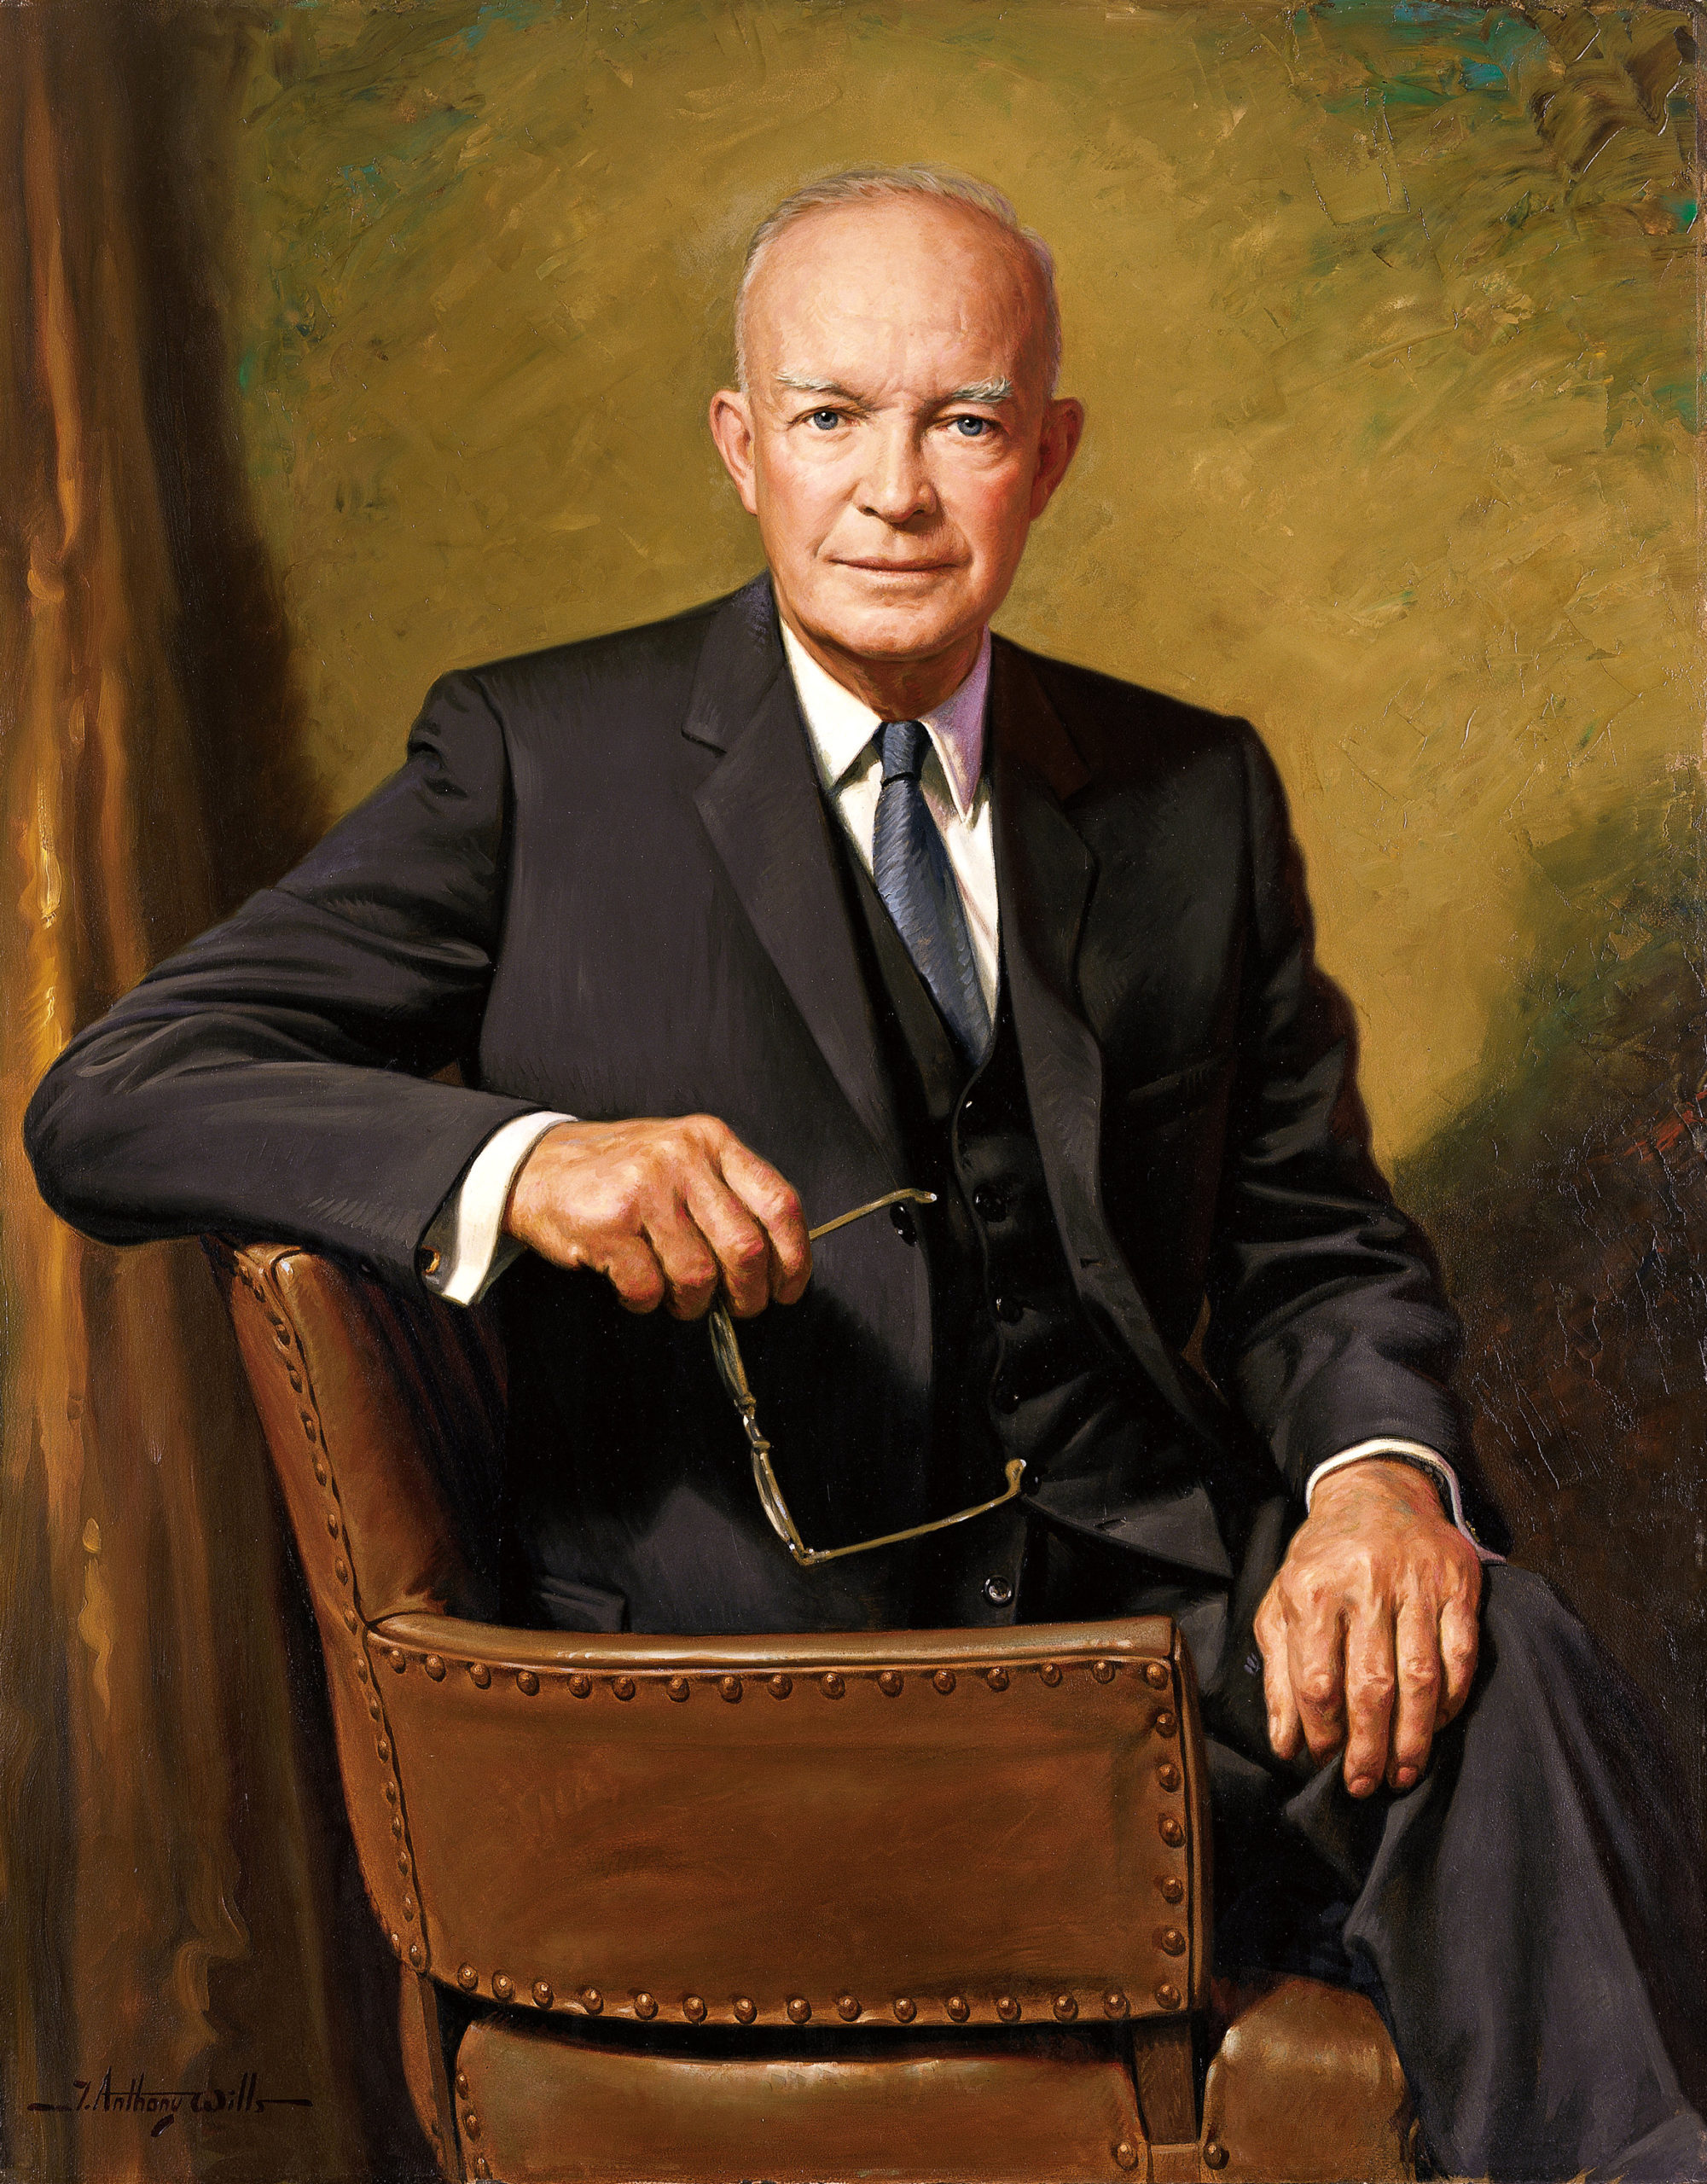 Portrait of Dwight Eisenhower sitting